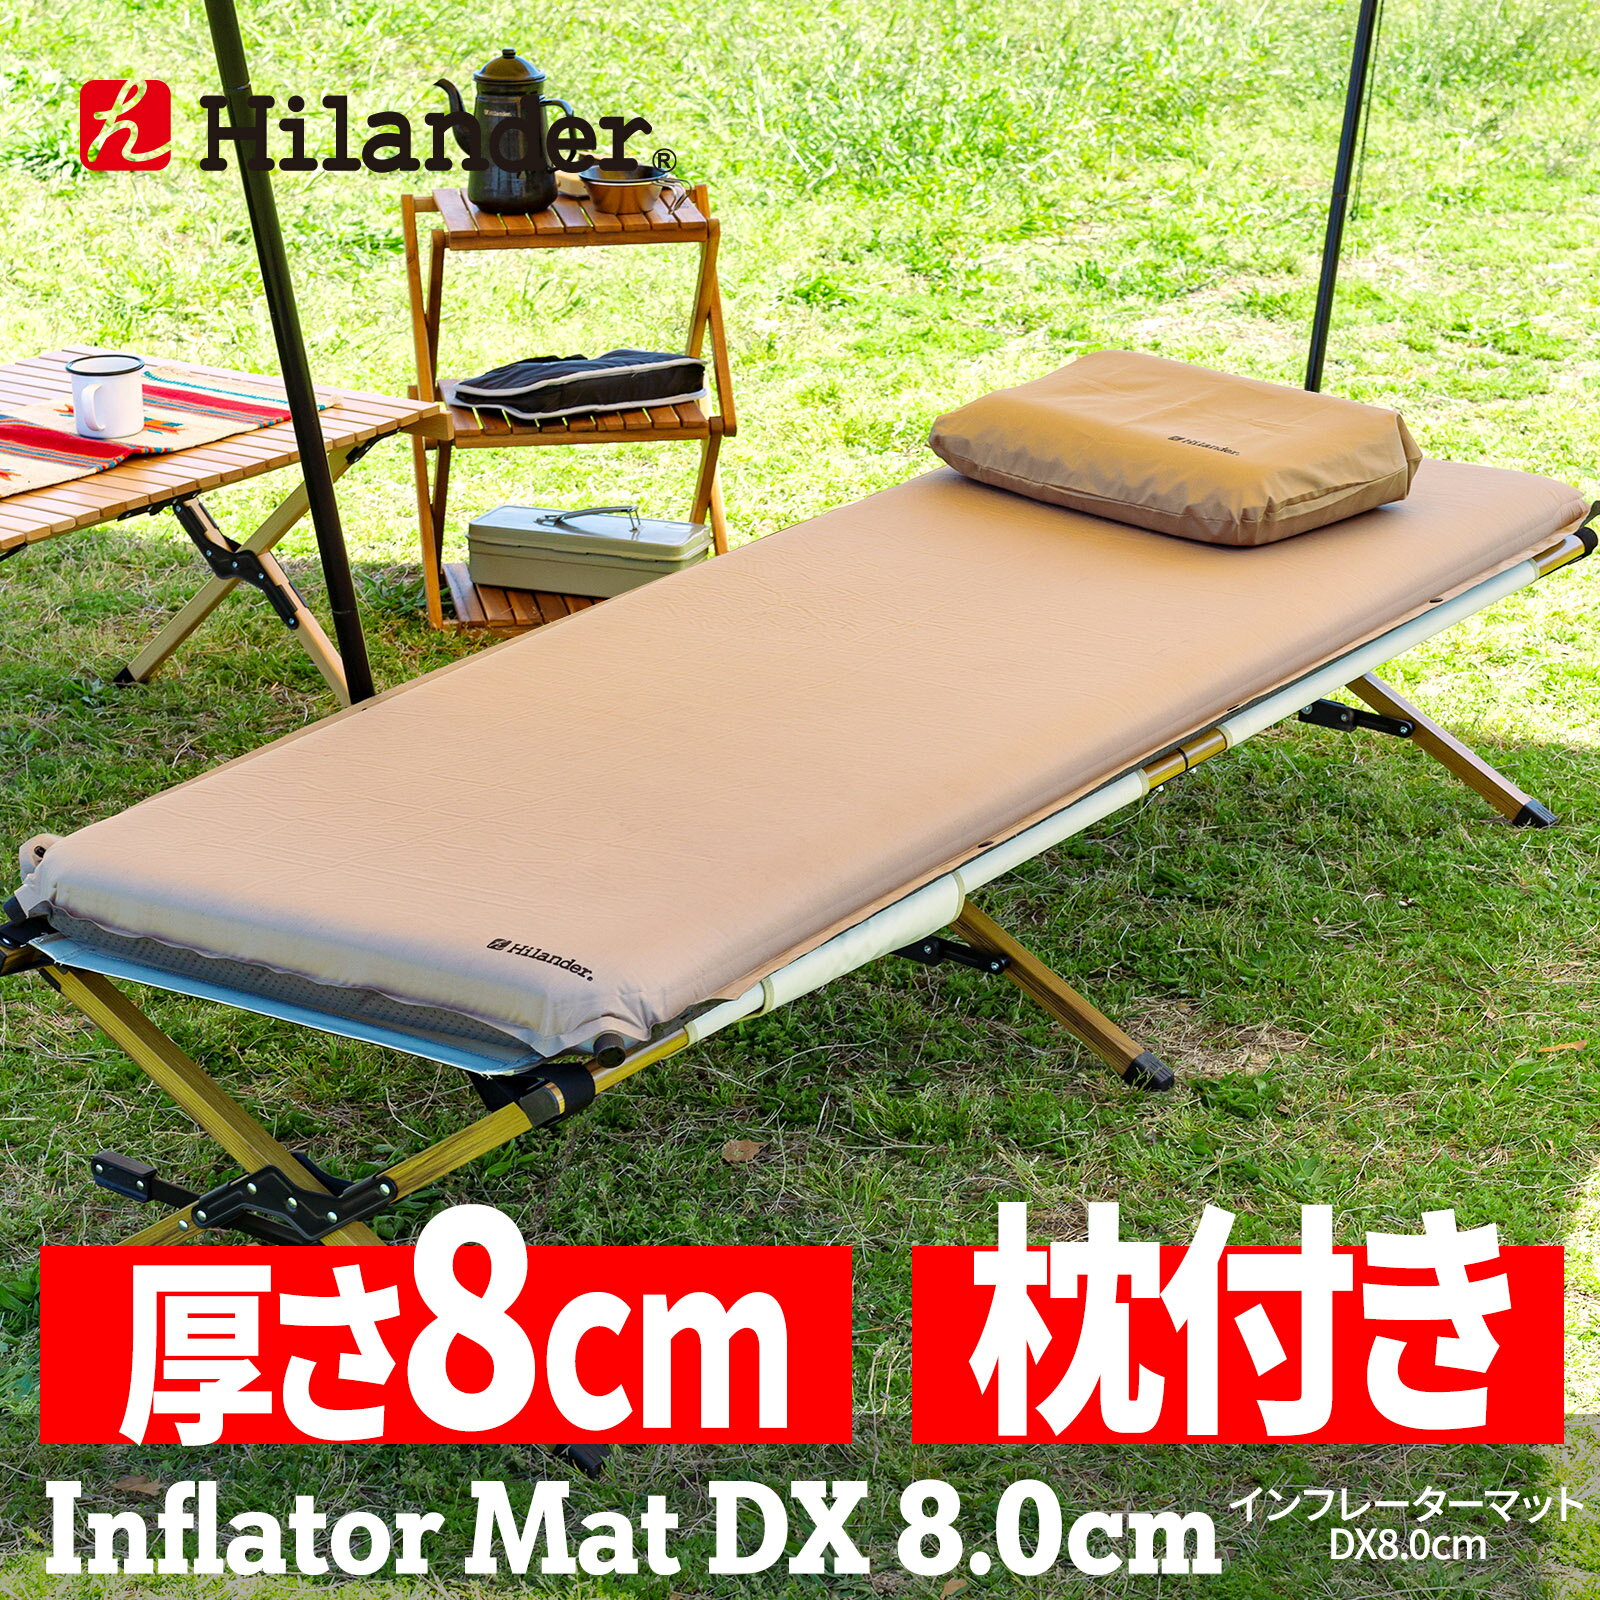 Hilander(ハイランダー) 8.0cm 枕付きインフレーターマットDX 【1年保証】 単体 HCA0378